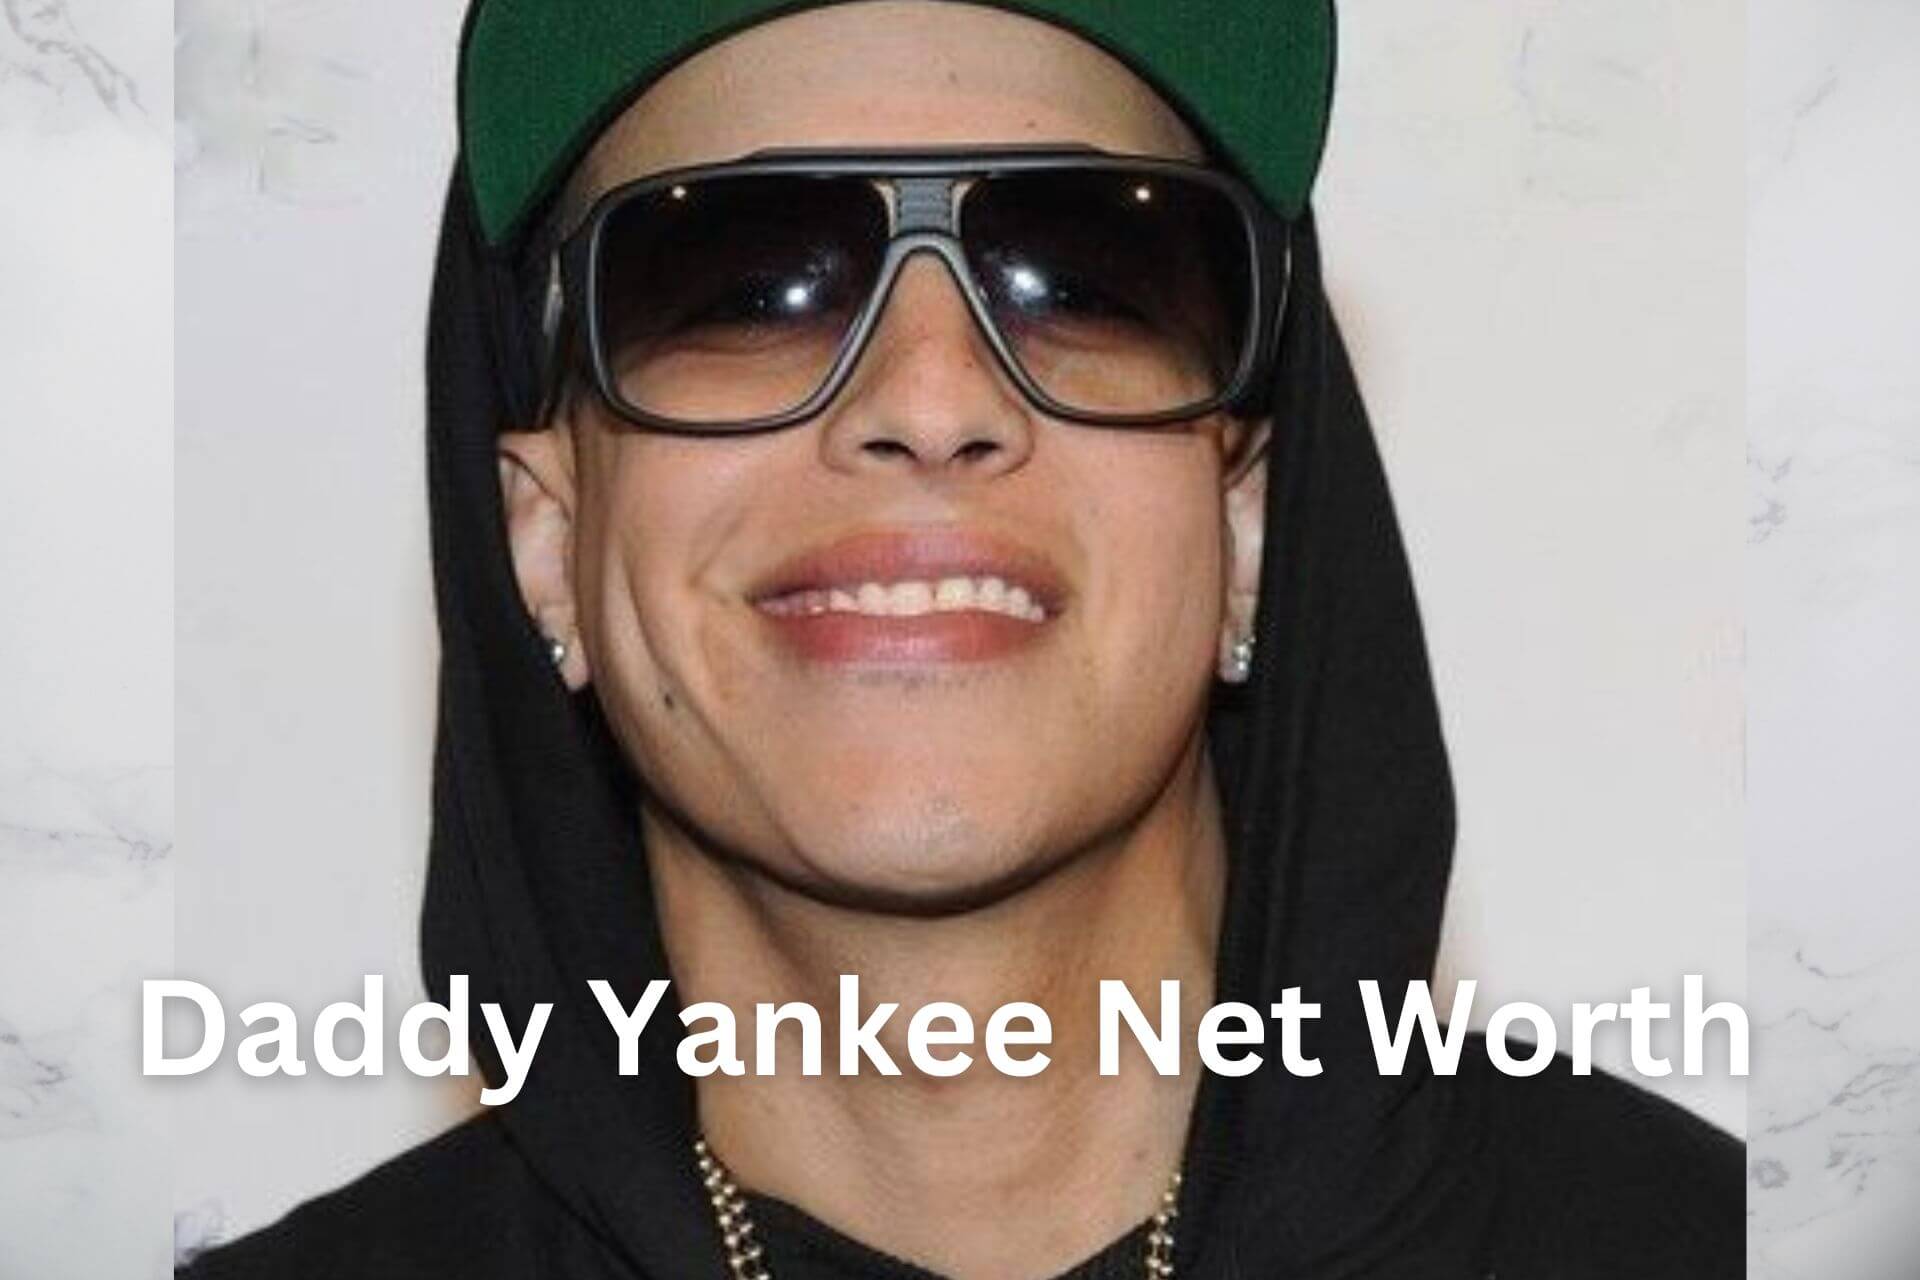 Daddy Yankee Net Worth